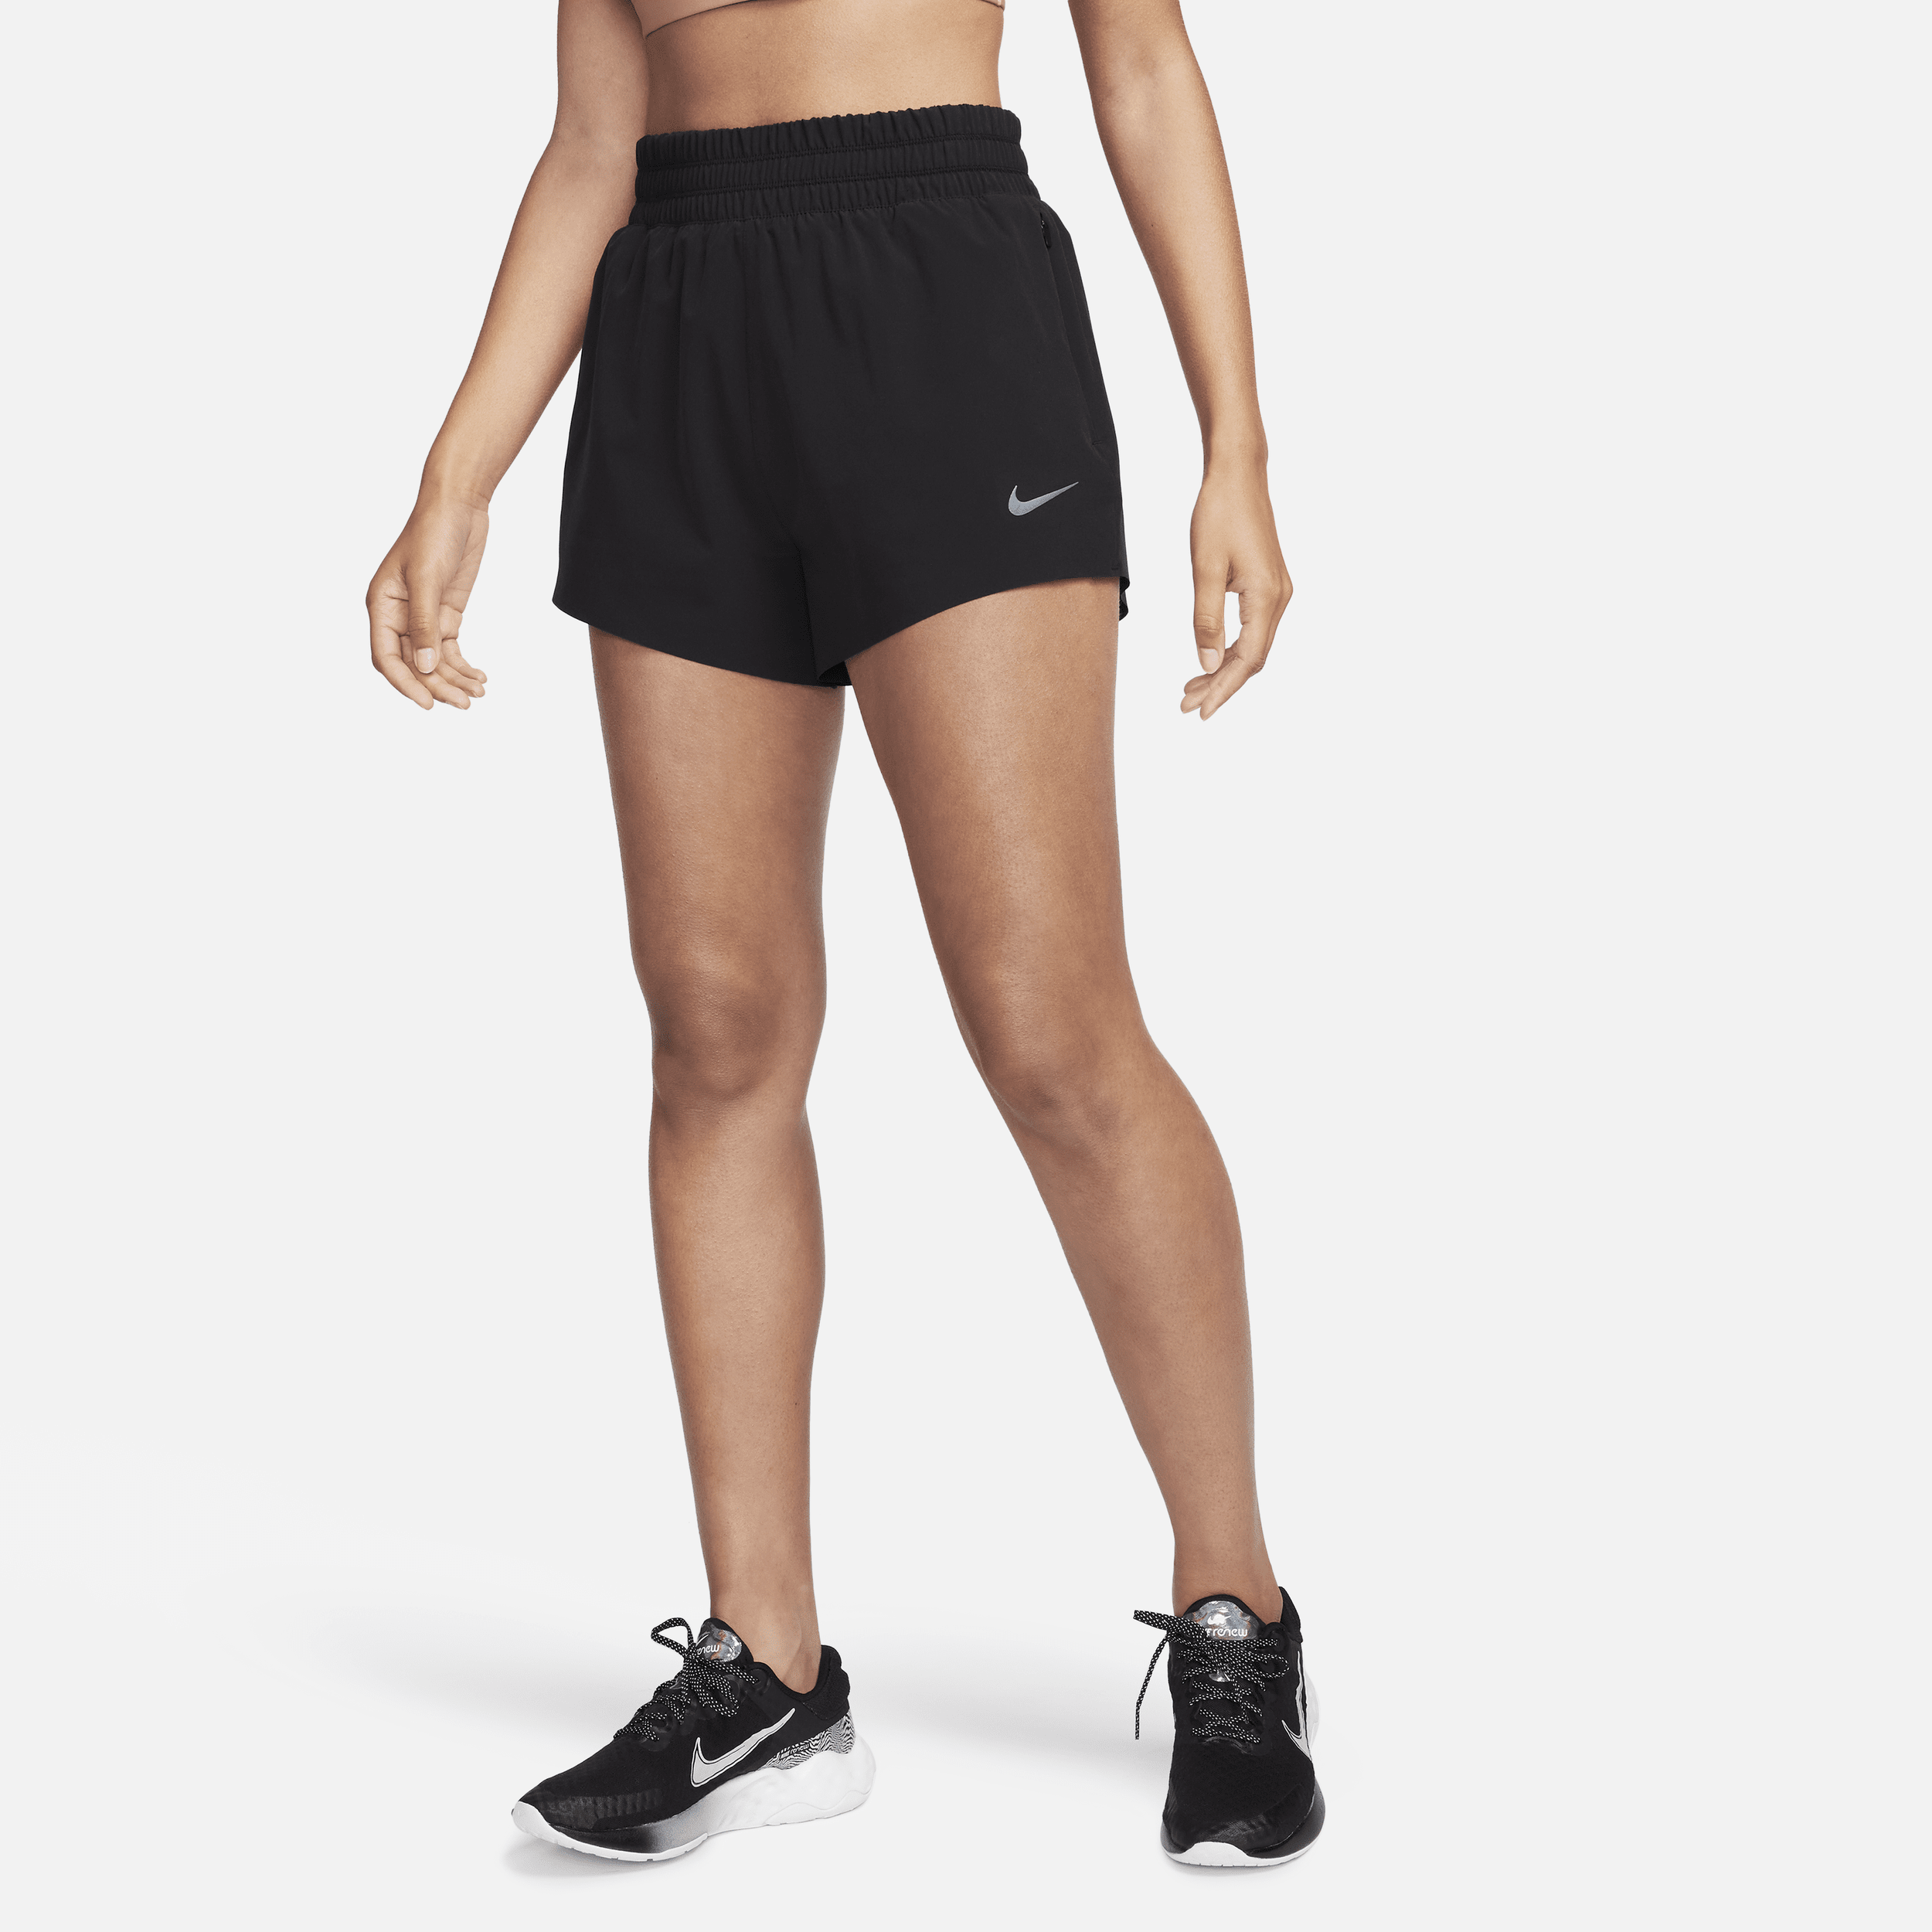 Nike Dri-FIT Running Division Pantalón corto de running de 8 cm con malla interior, talle alto y bolsillos - Mujer - Negro